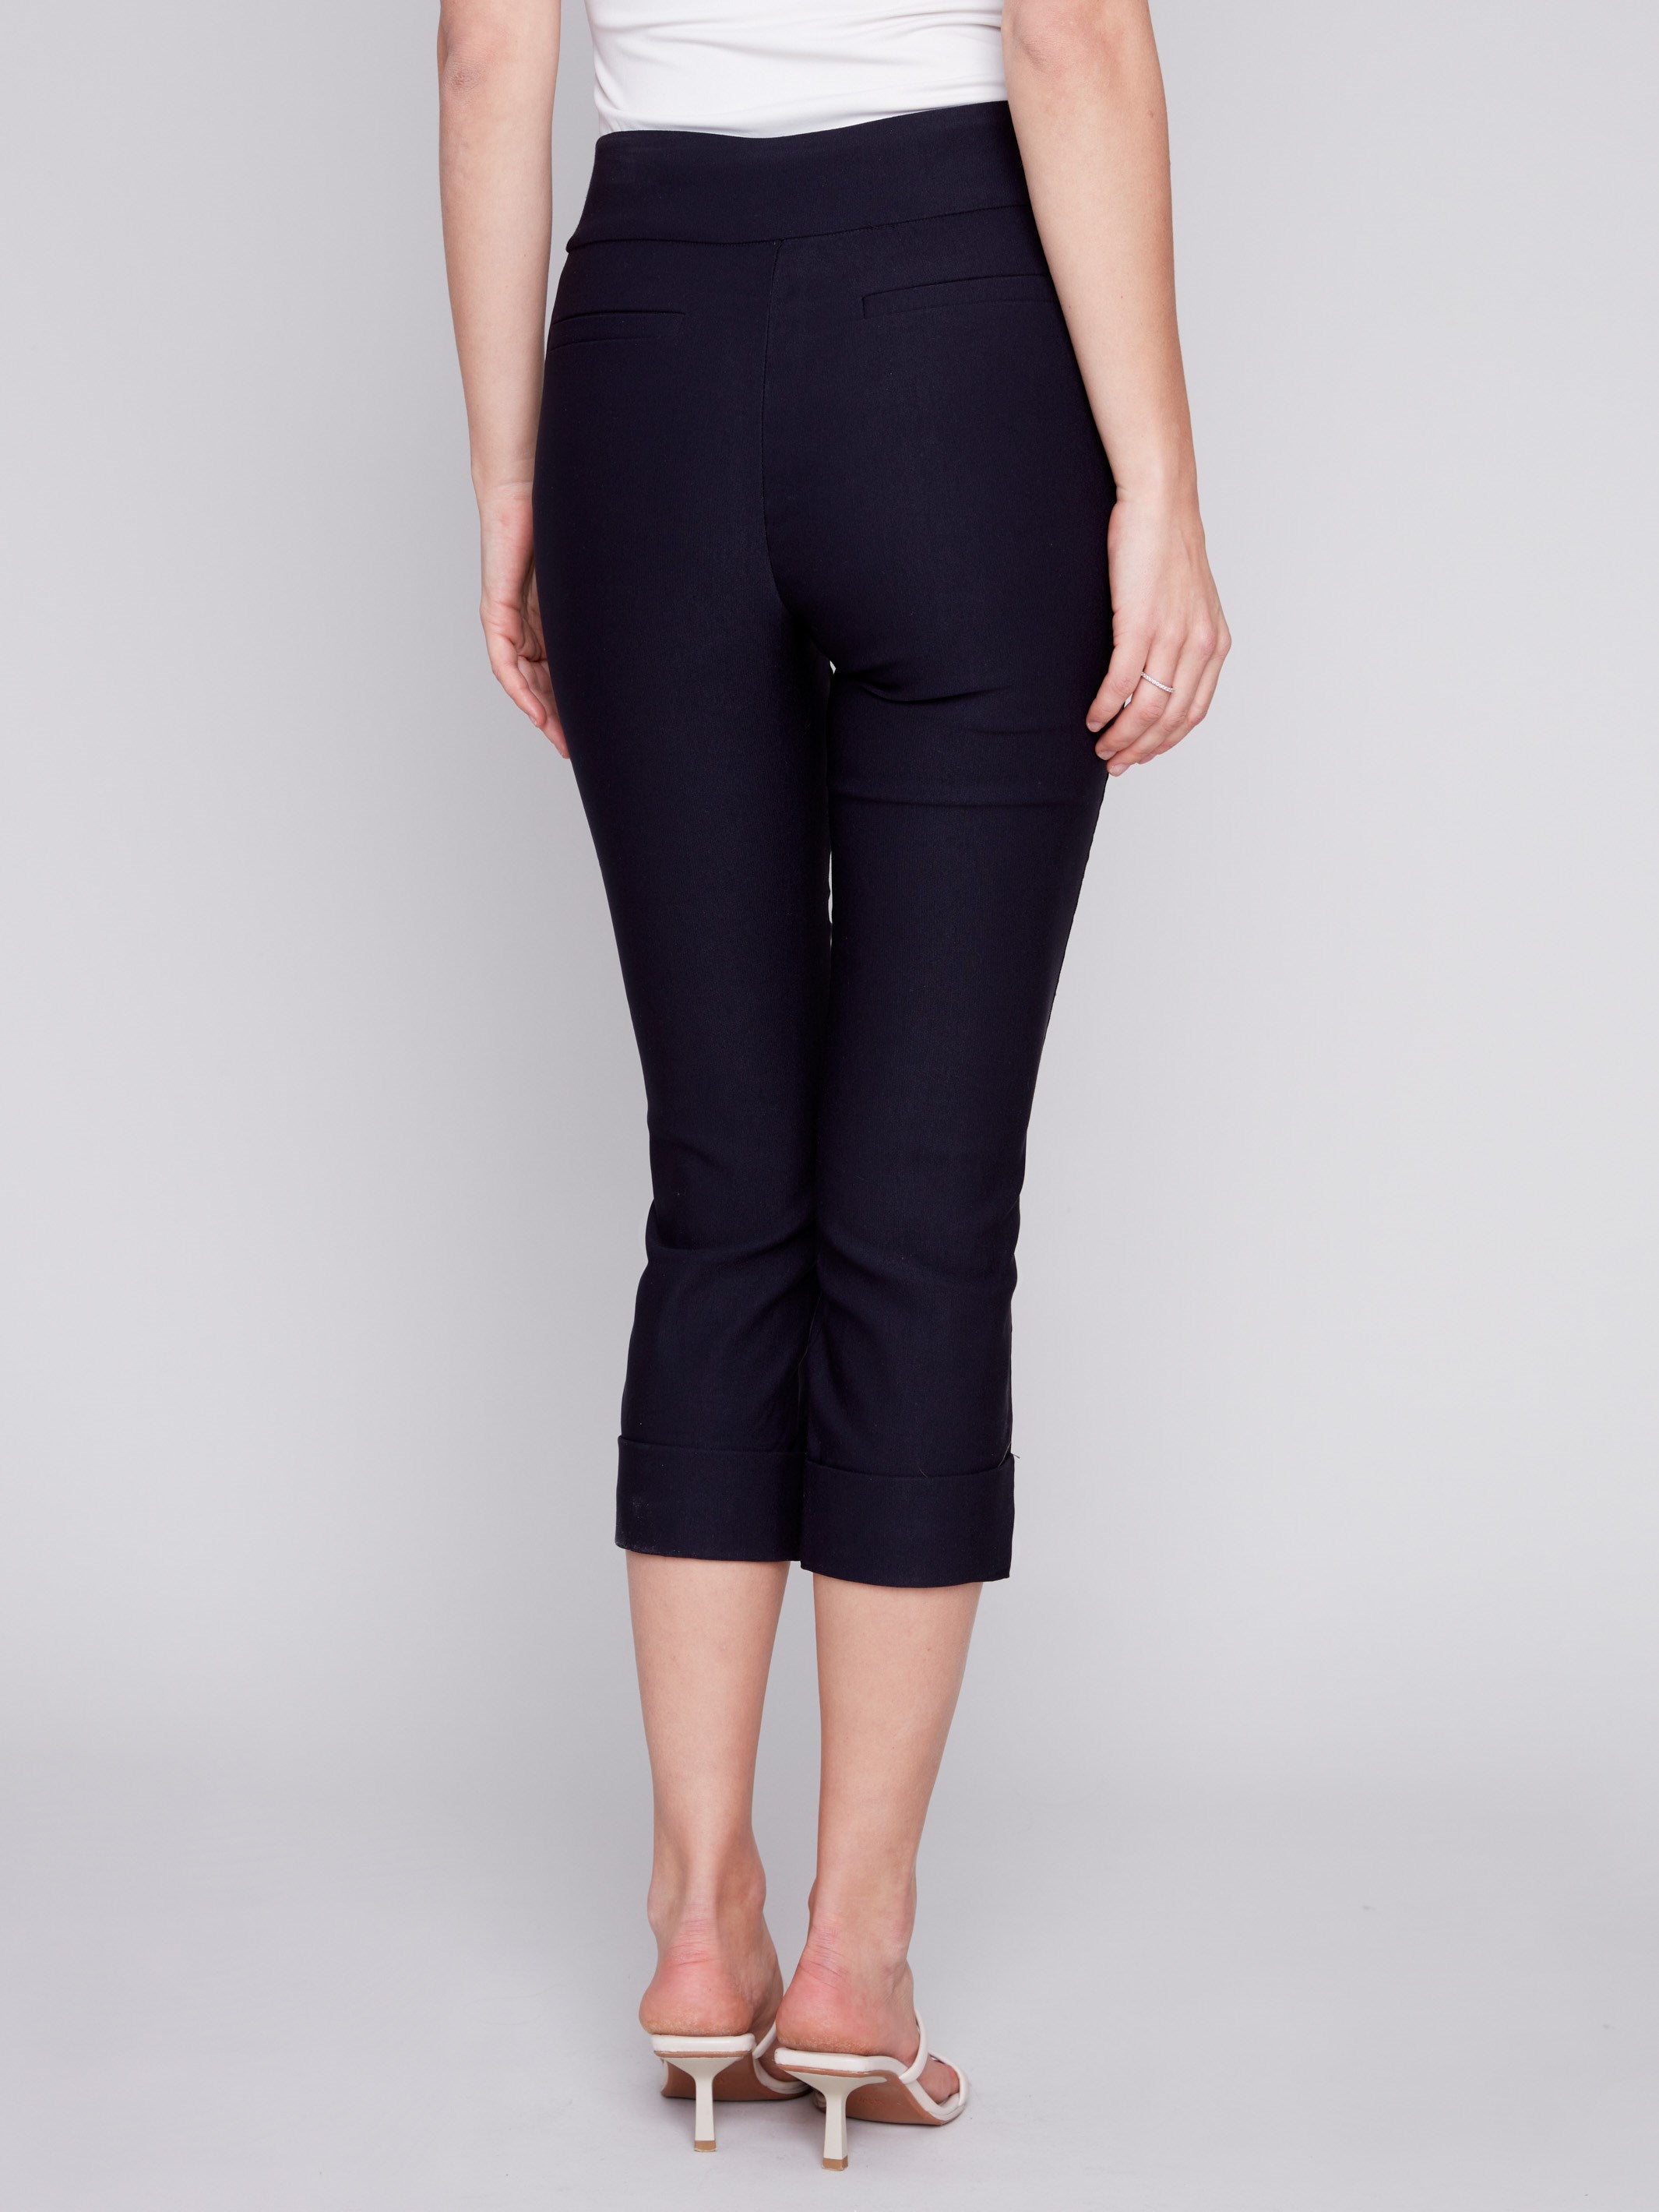 Women's Stretch Pull-On Capri Pants, Black